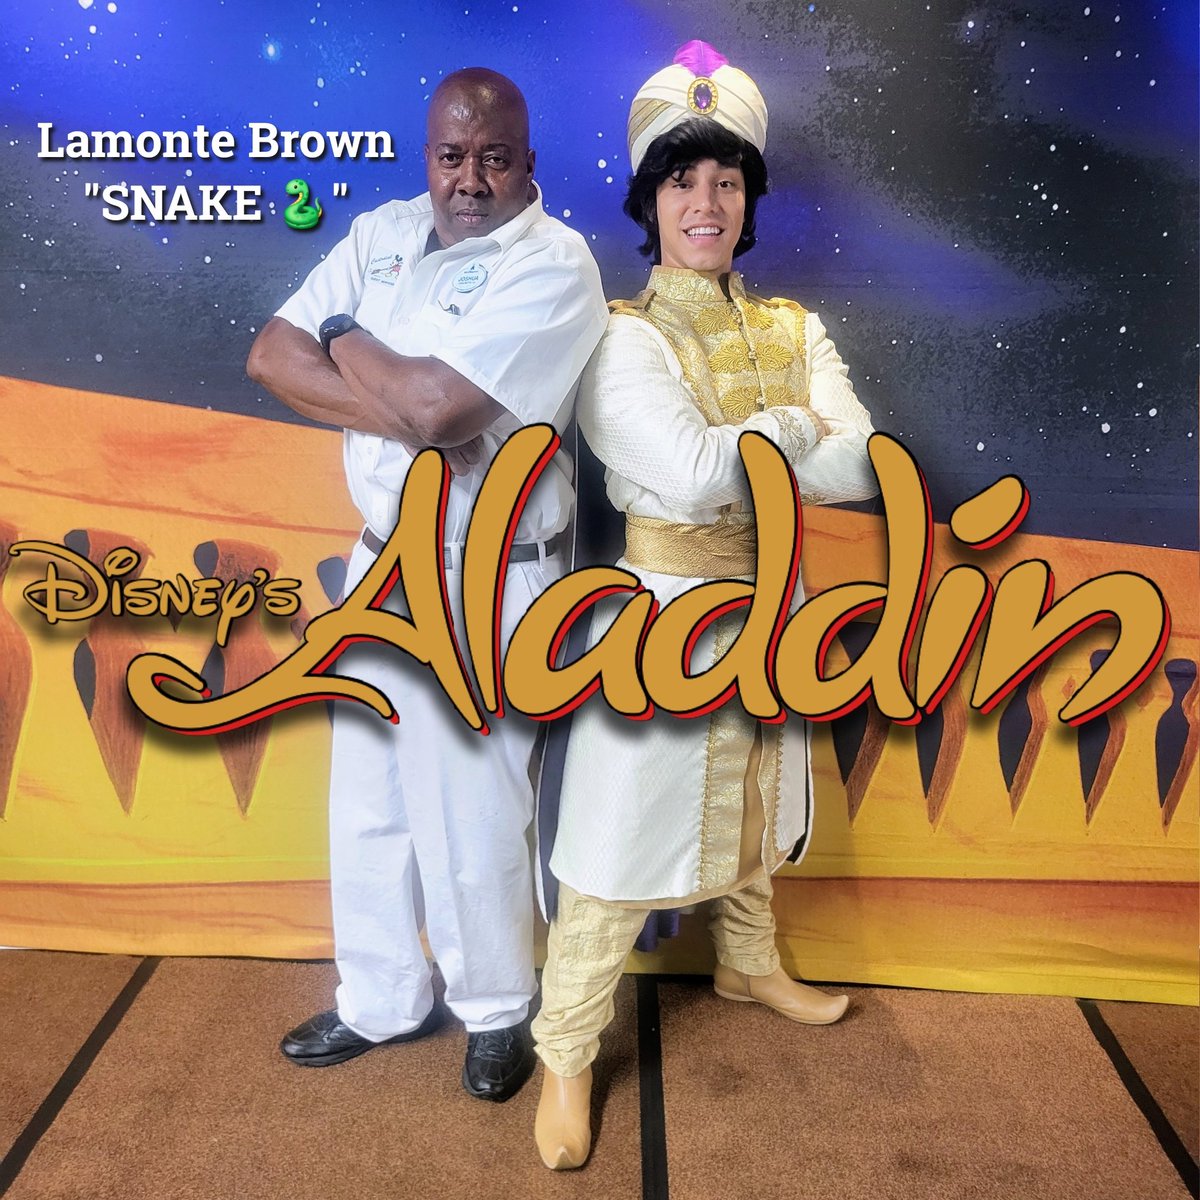 #Aladdin #Disney #Genie #PrincessJasmine #MagicCarpet #AWholeNewWorld #Jasmine #Sultan #Agrabah #AladdinMusical #AladdinMovie #AladdinBroadway #PrinceAli #Jafar #TheCaveOfWonders #Rajah #Abu #AladdinAndJasmine #AladdinLiveAction #FriendLikeMe
```